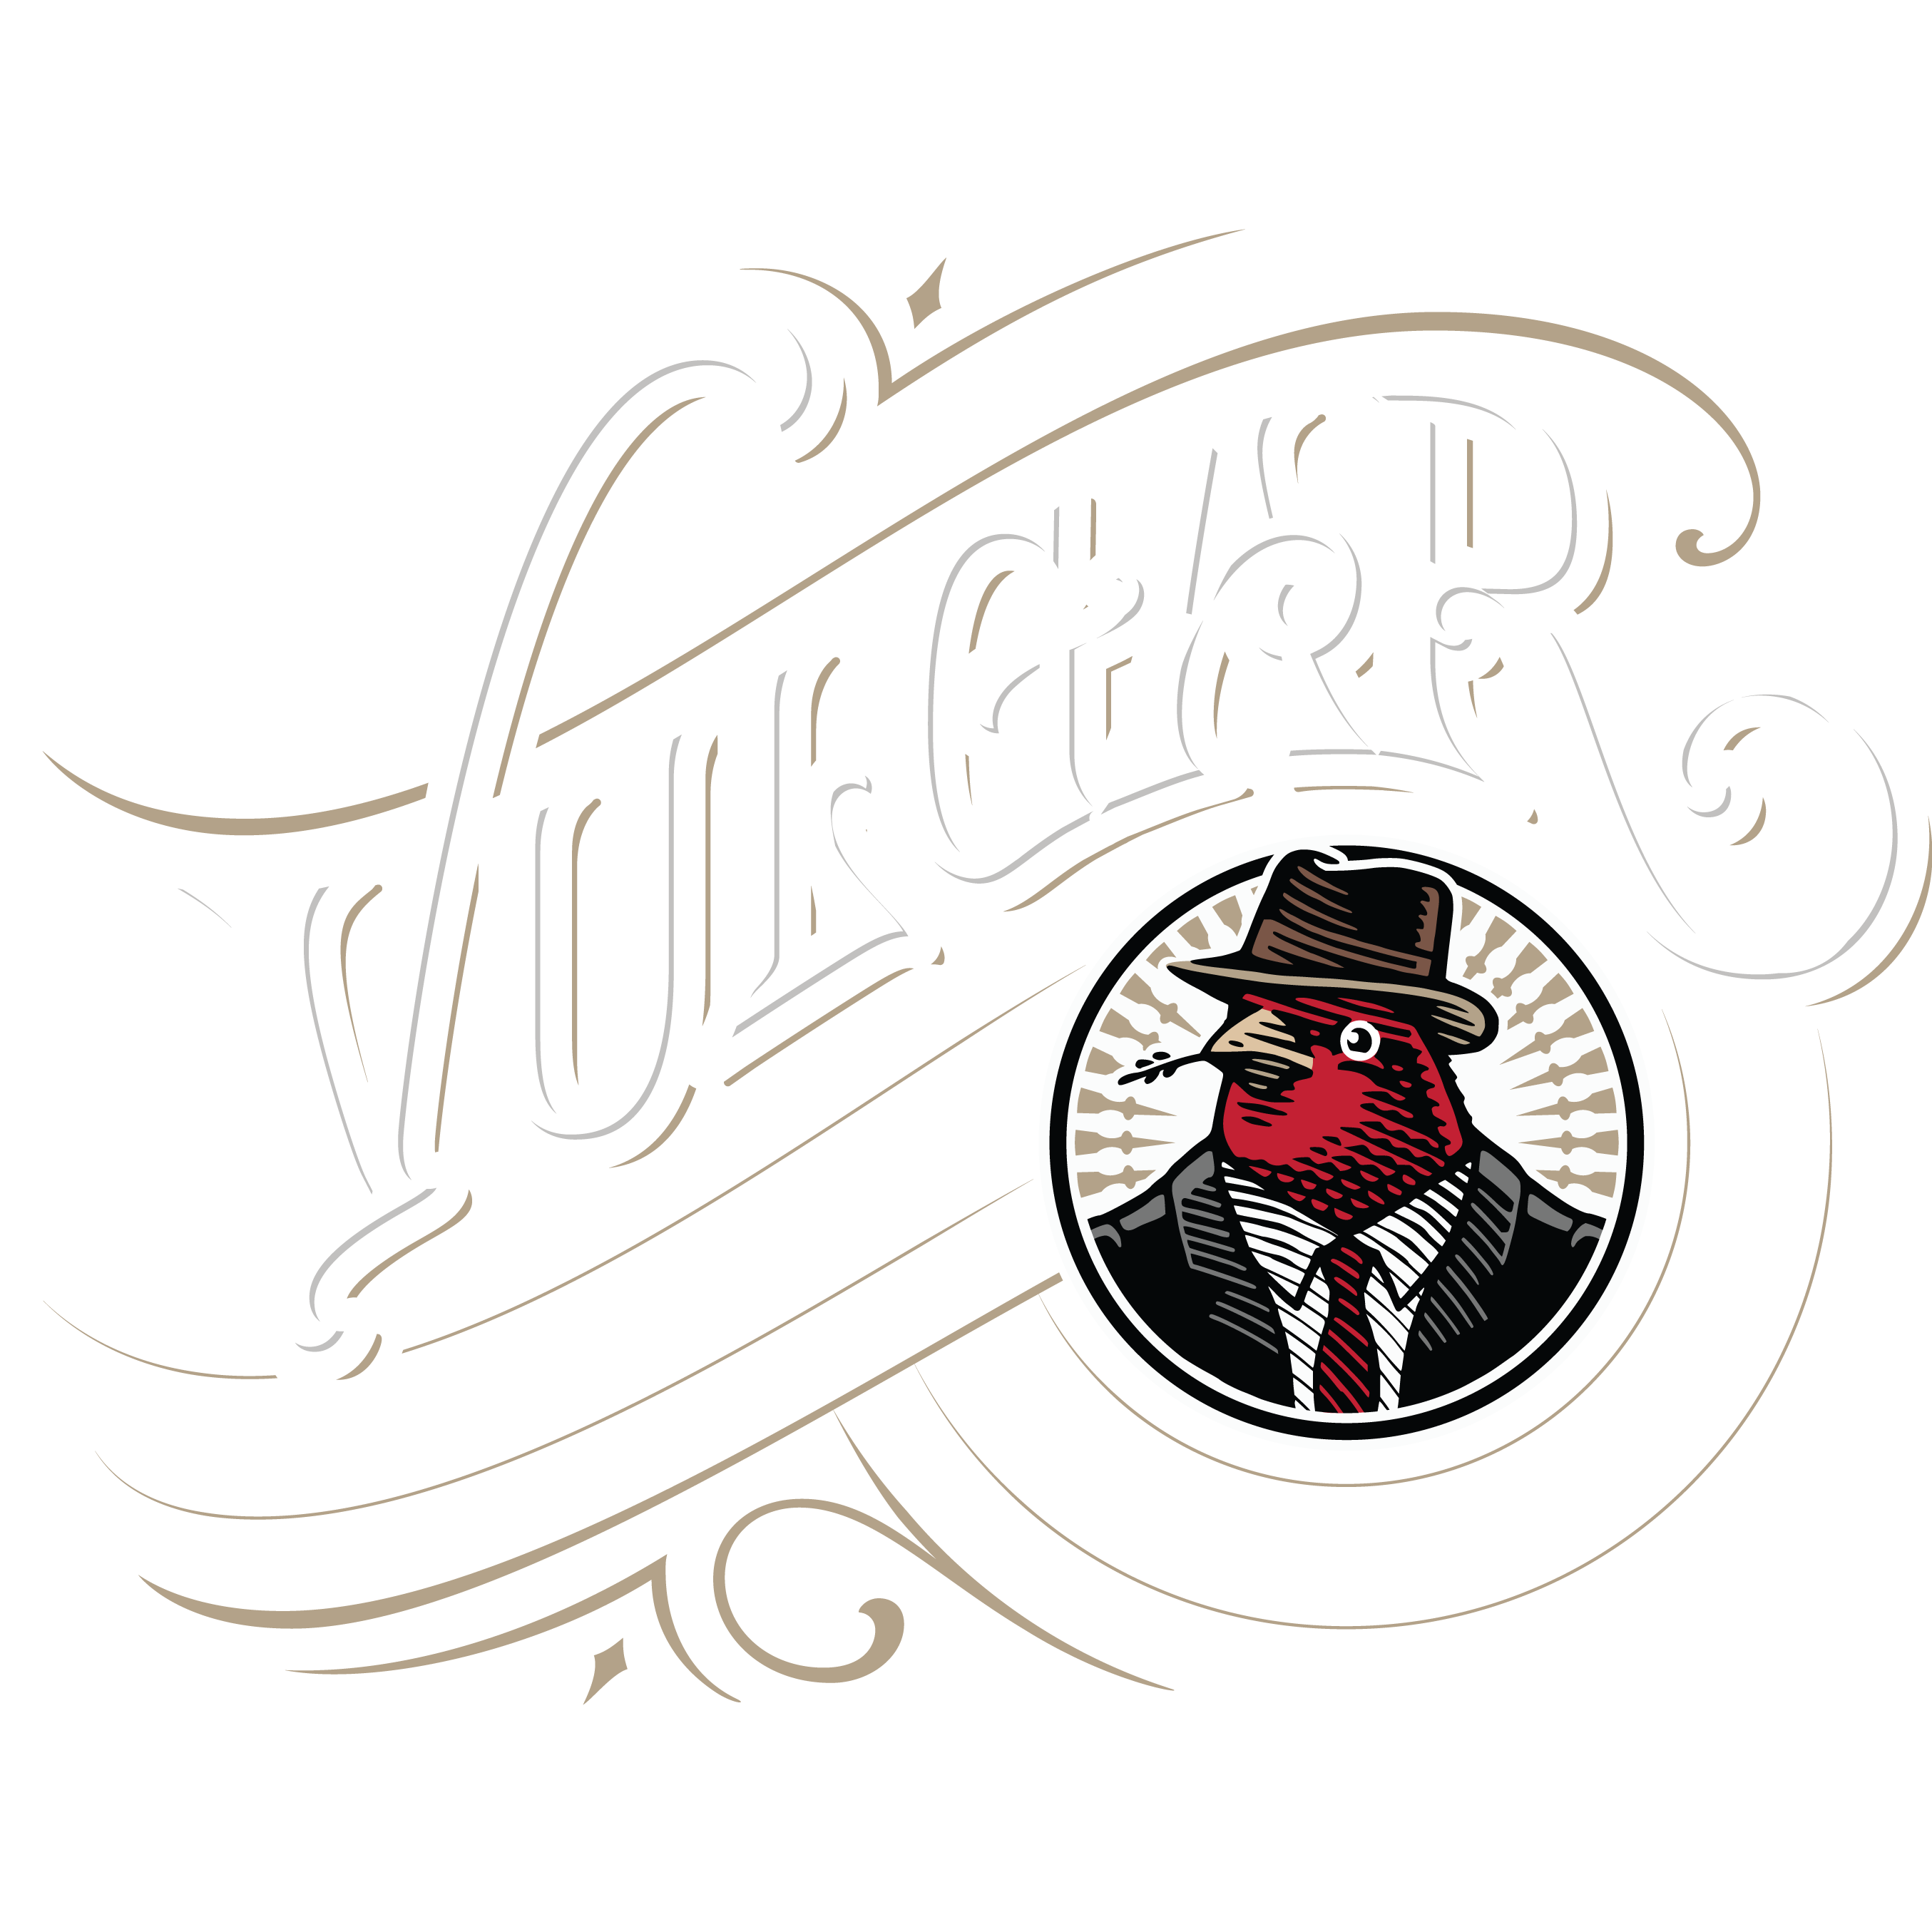 https://vulgarbrewing.com/wp-content/uploads/2020/09/Full-logo-650-01.png